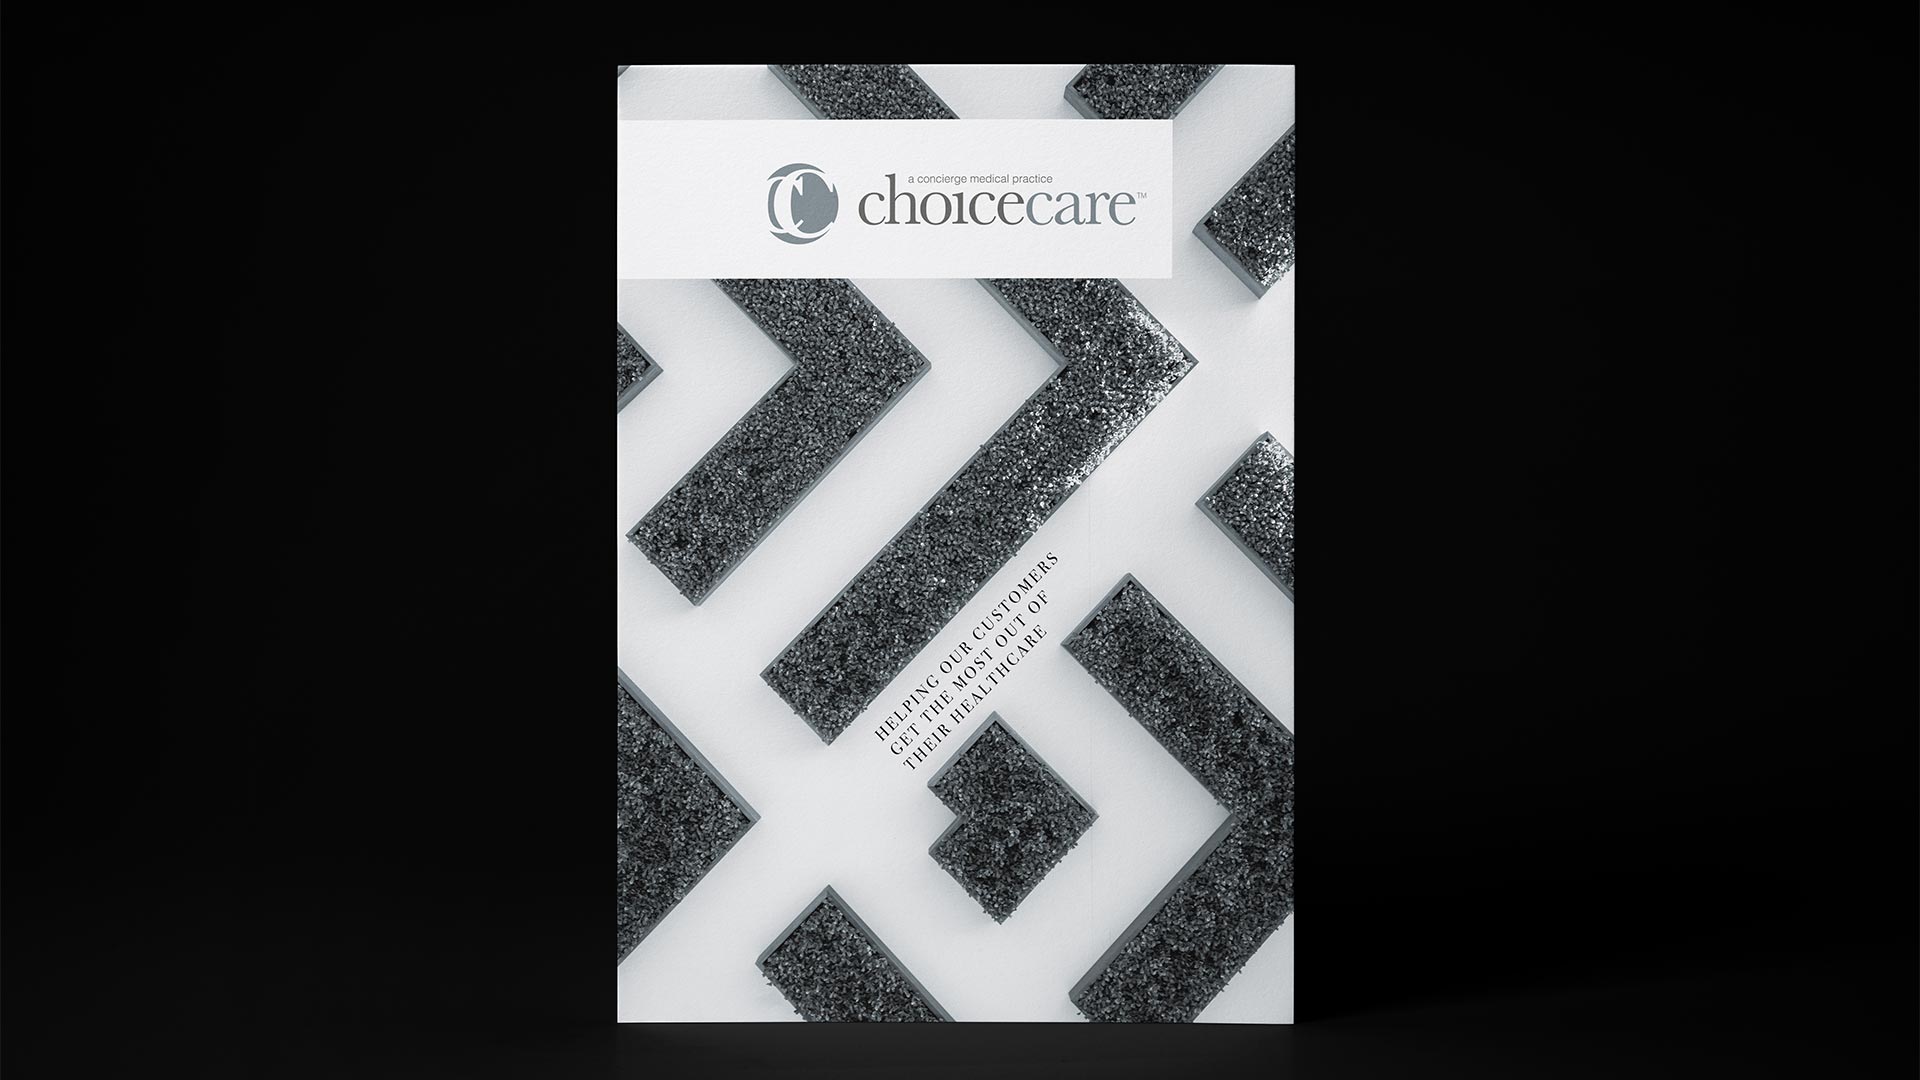 choice care magazine cover